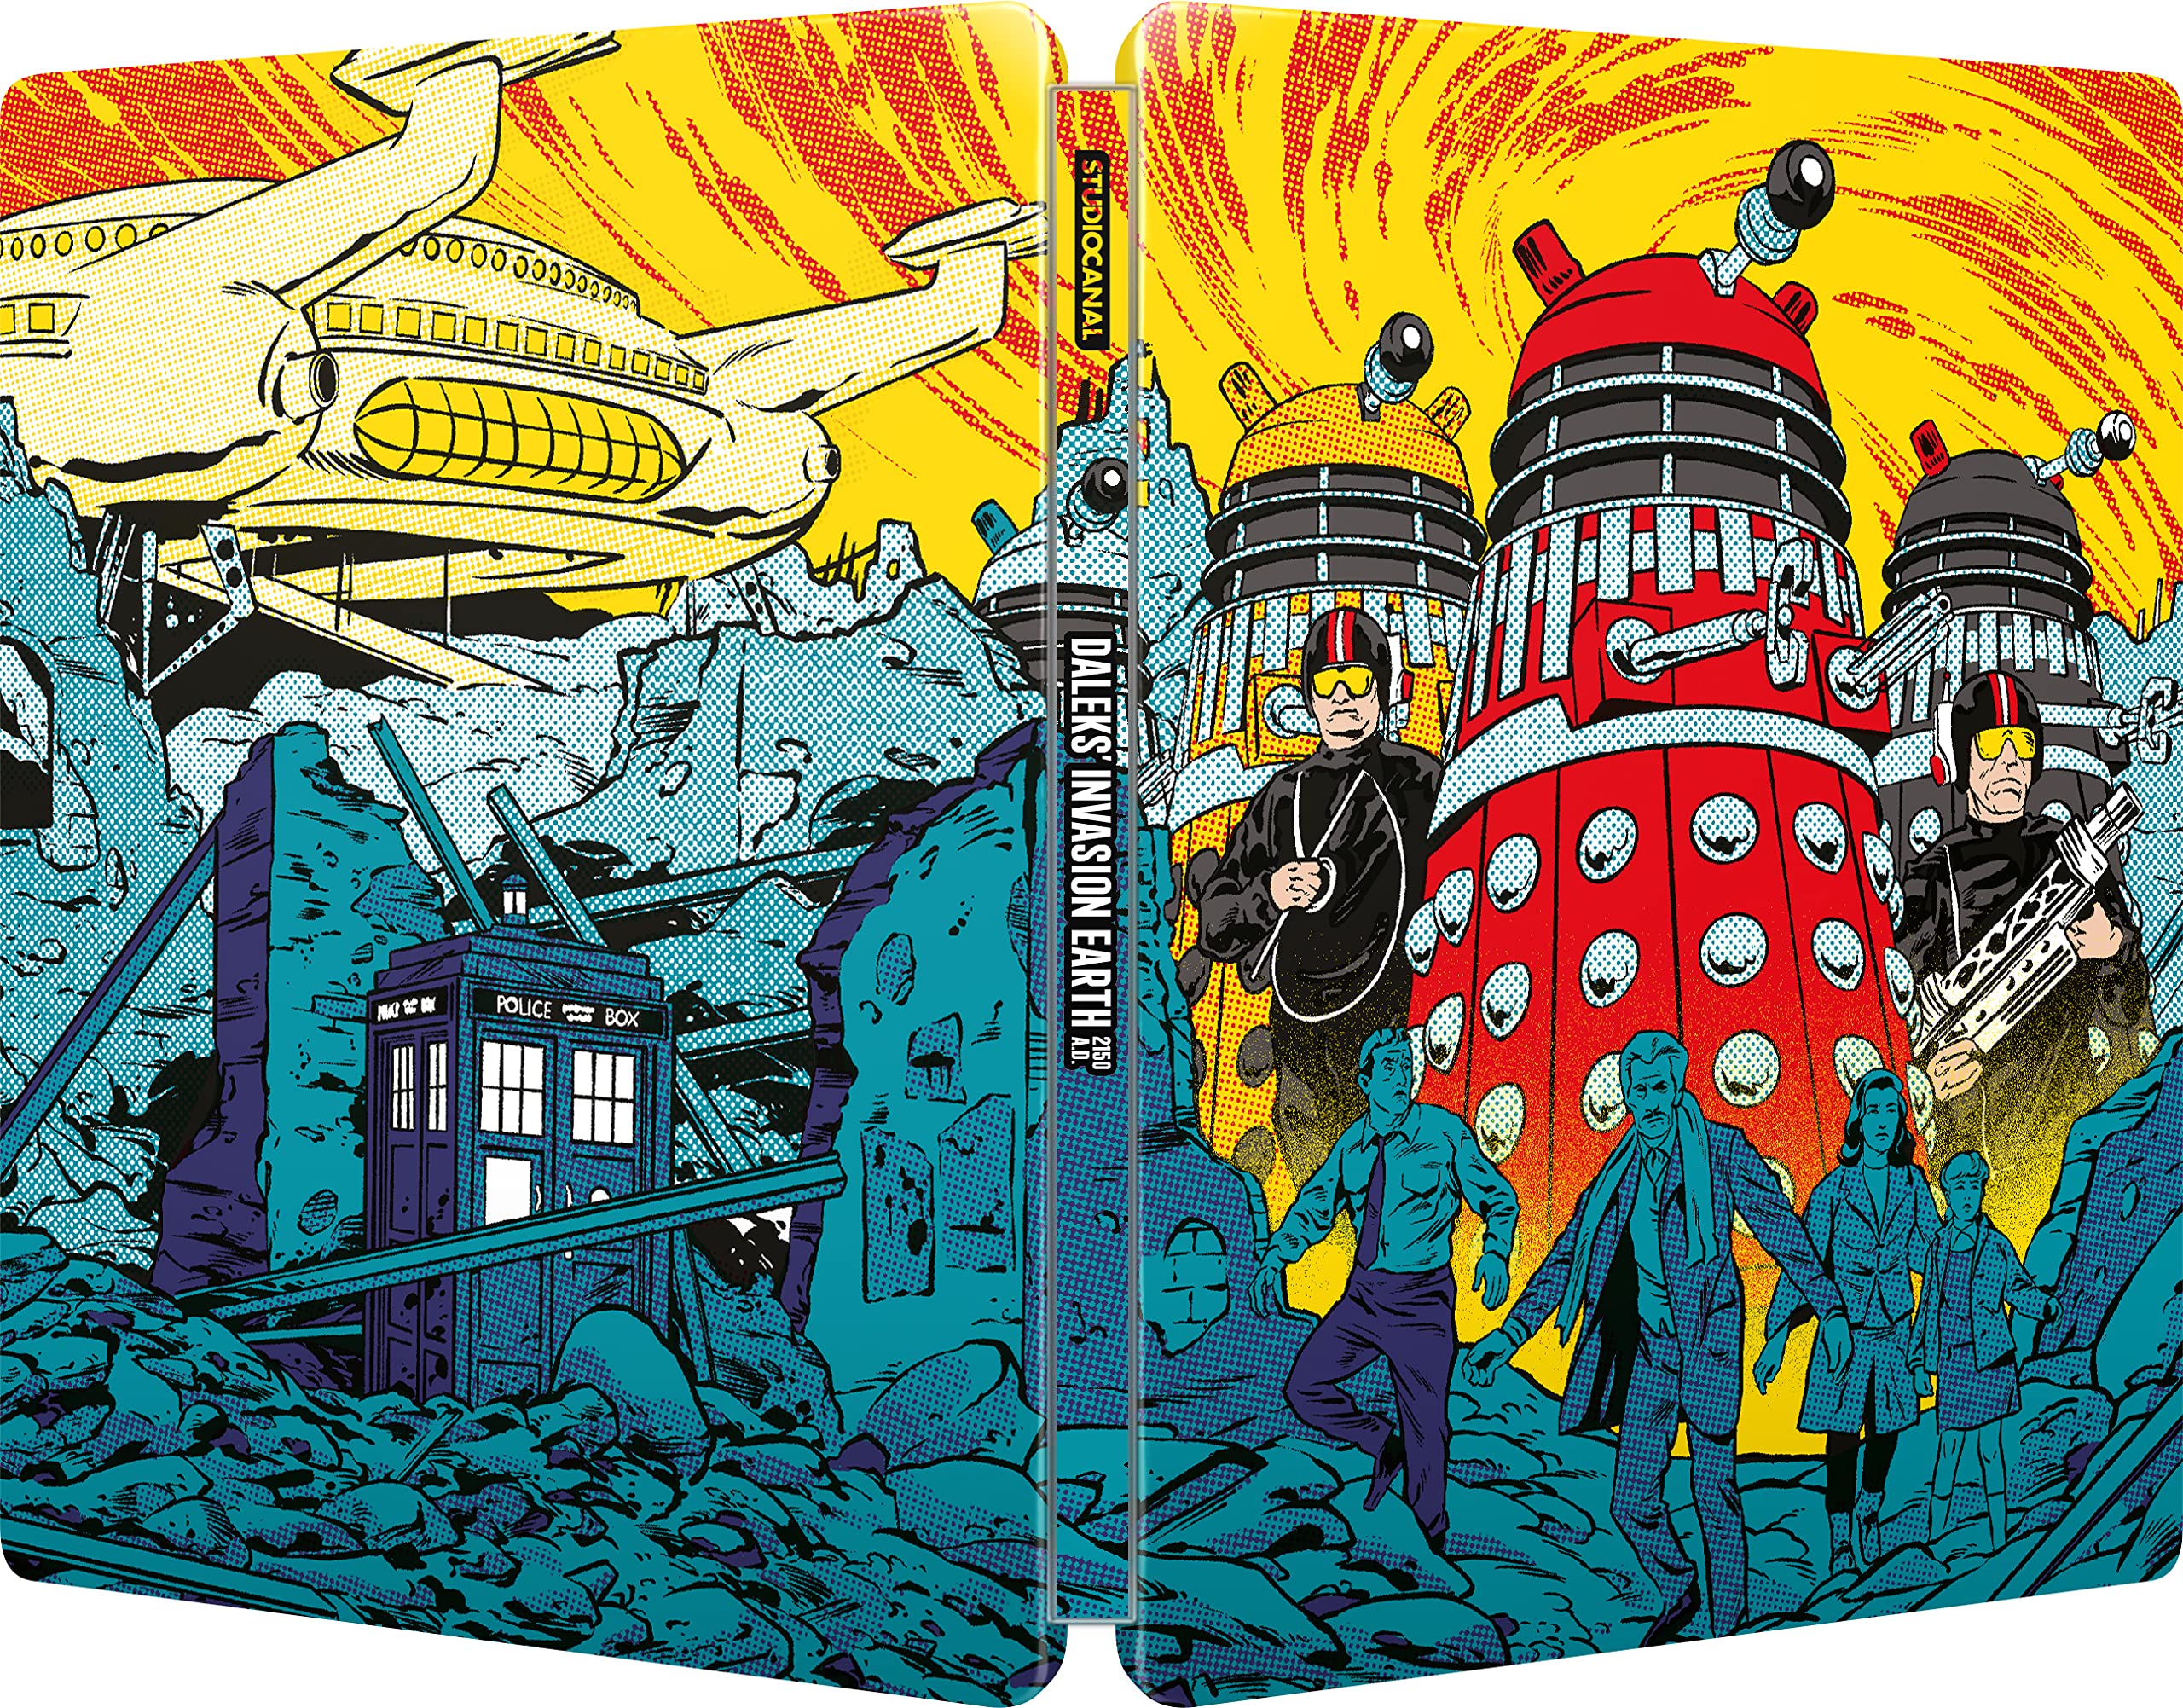 Daleks' Invasion Earth 2150 A.D. Steelbook [Blu-ray] [Region A & B & C]